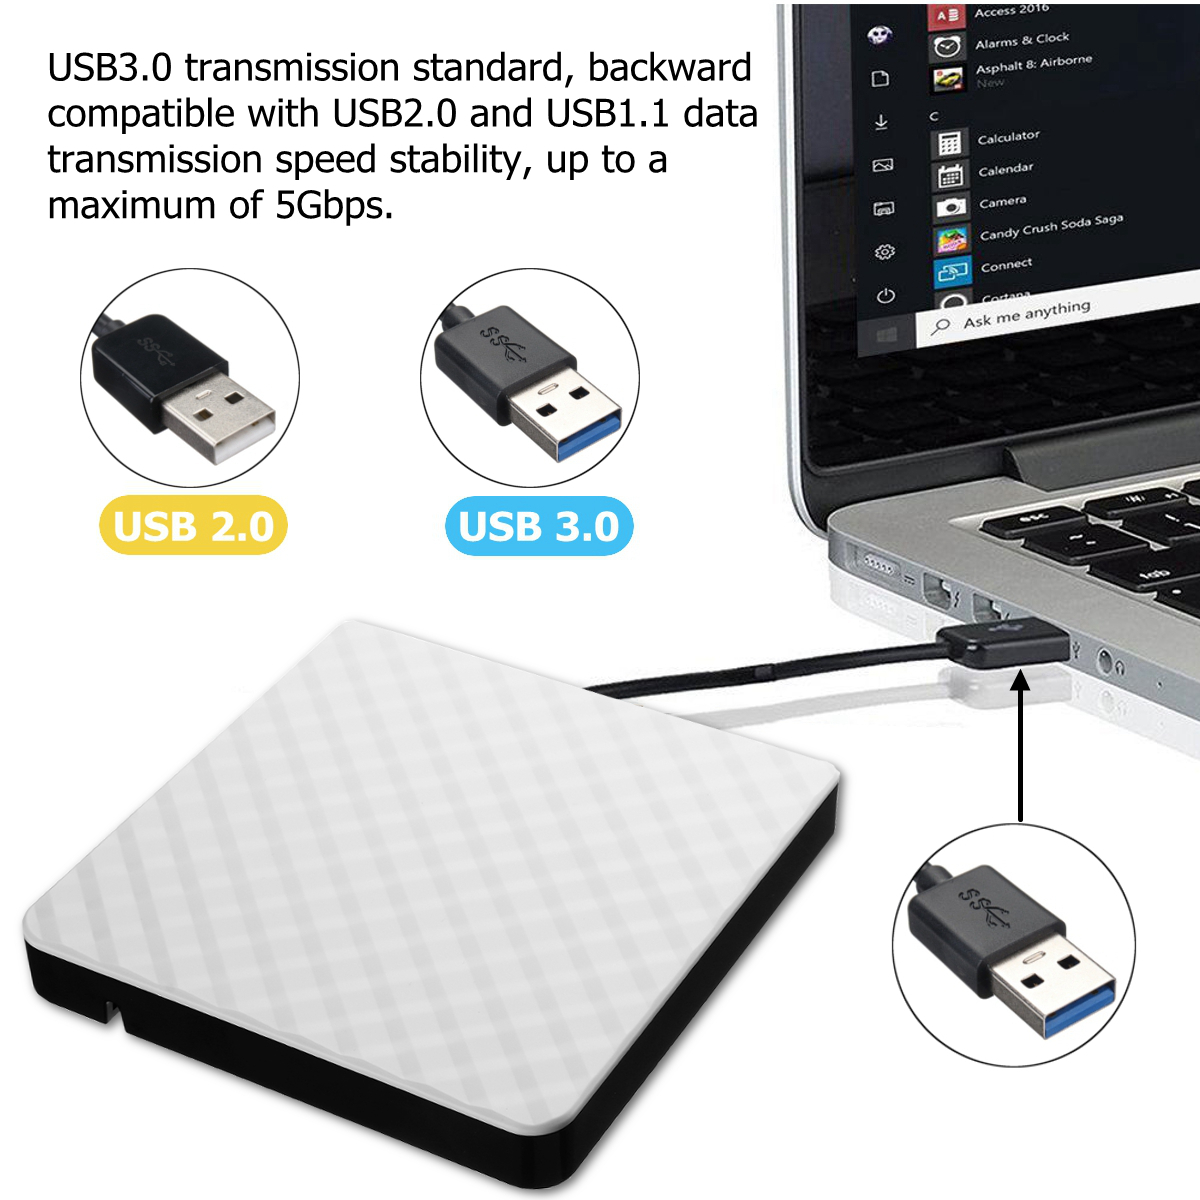 External-USB-30-DVD-RW-CD-Writer-Slim-Carbon-Grain-Drive-Burner-Reader-Player-For-PC-Laptop-Optical--1536013-4